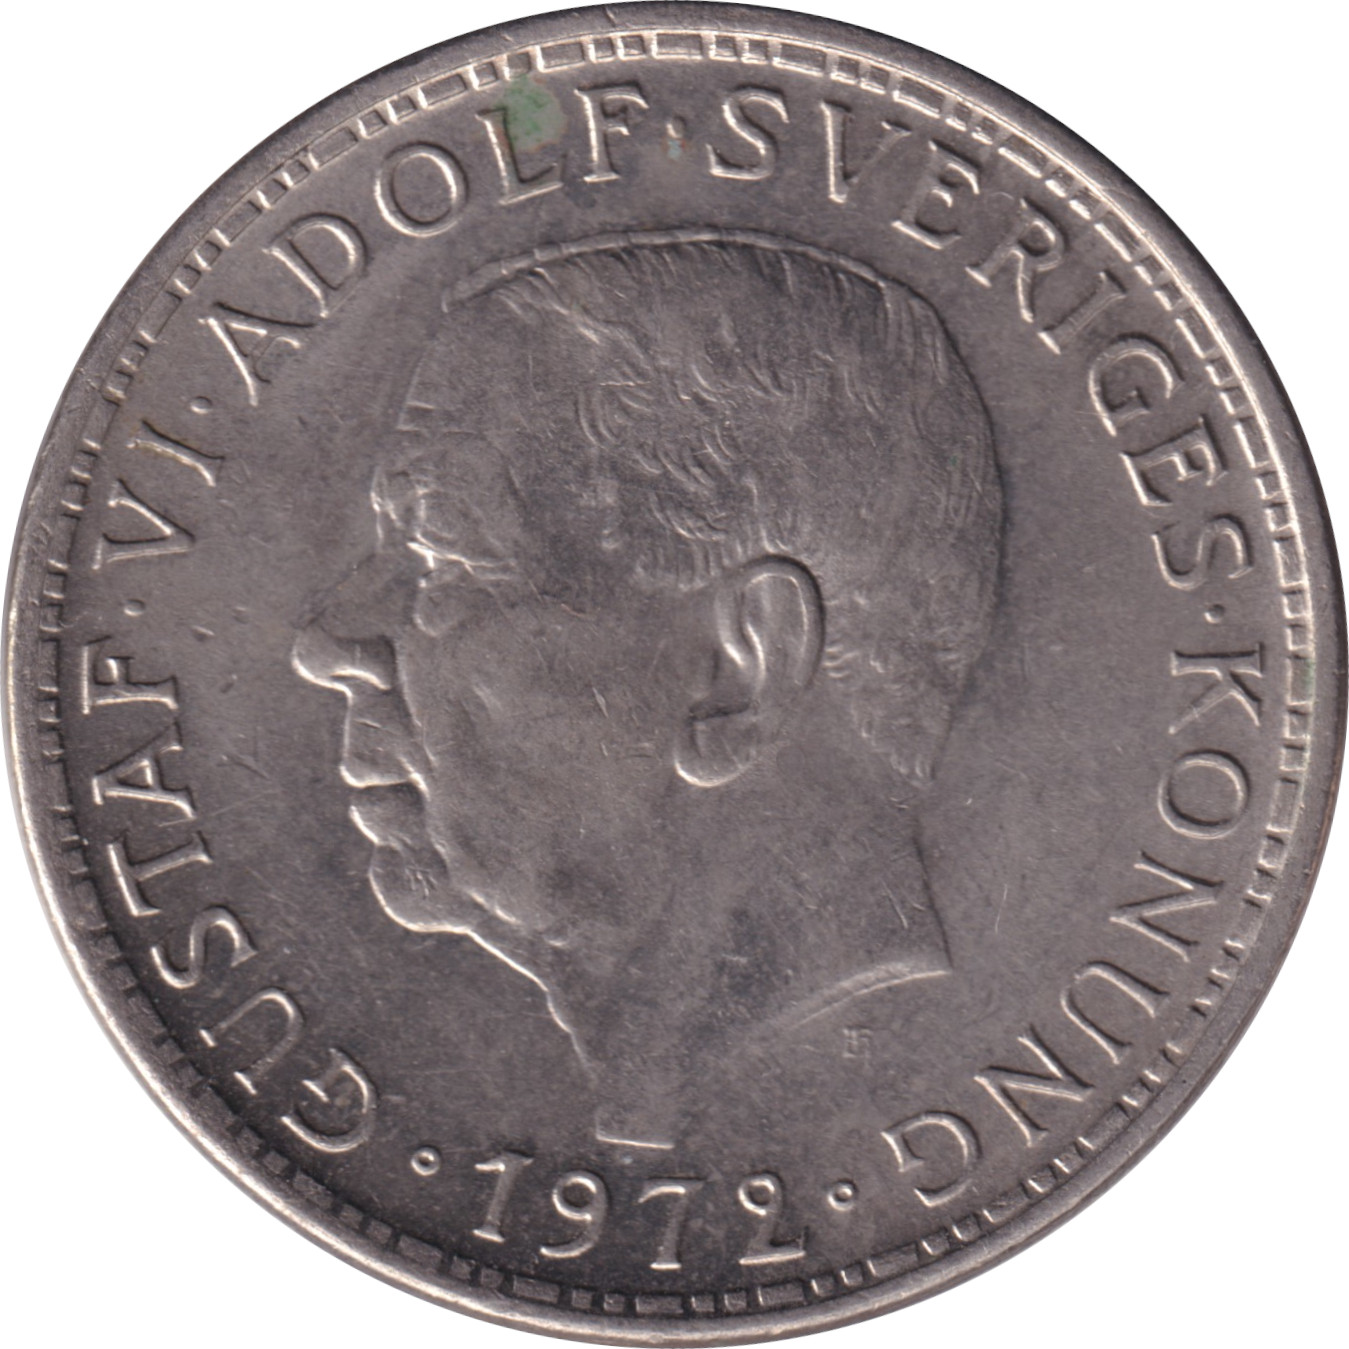 5 kronor - Gustave VI - Old head